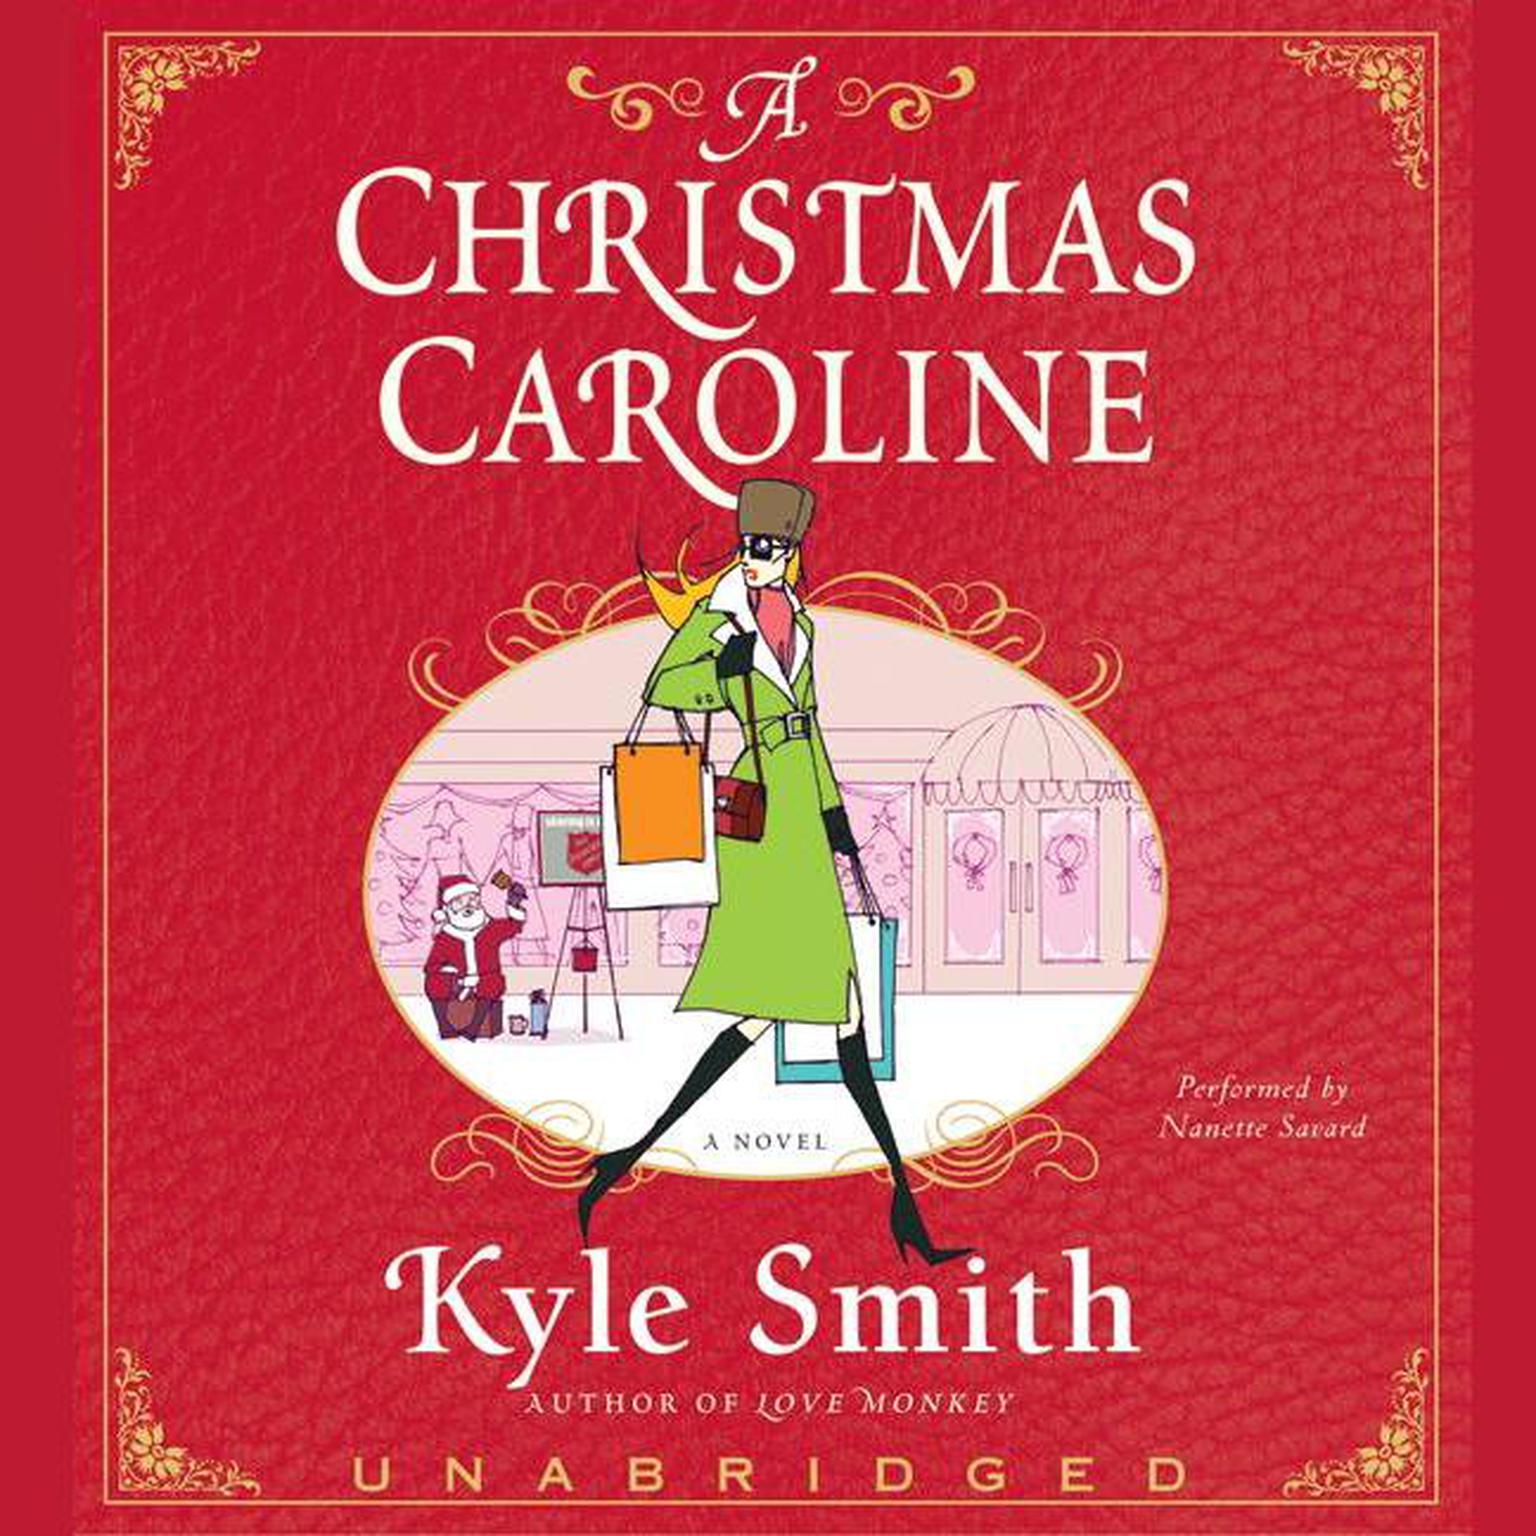 A Christmas Caroline (Abridged) Audiobook, by Kyle Smith